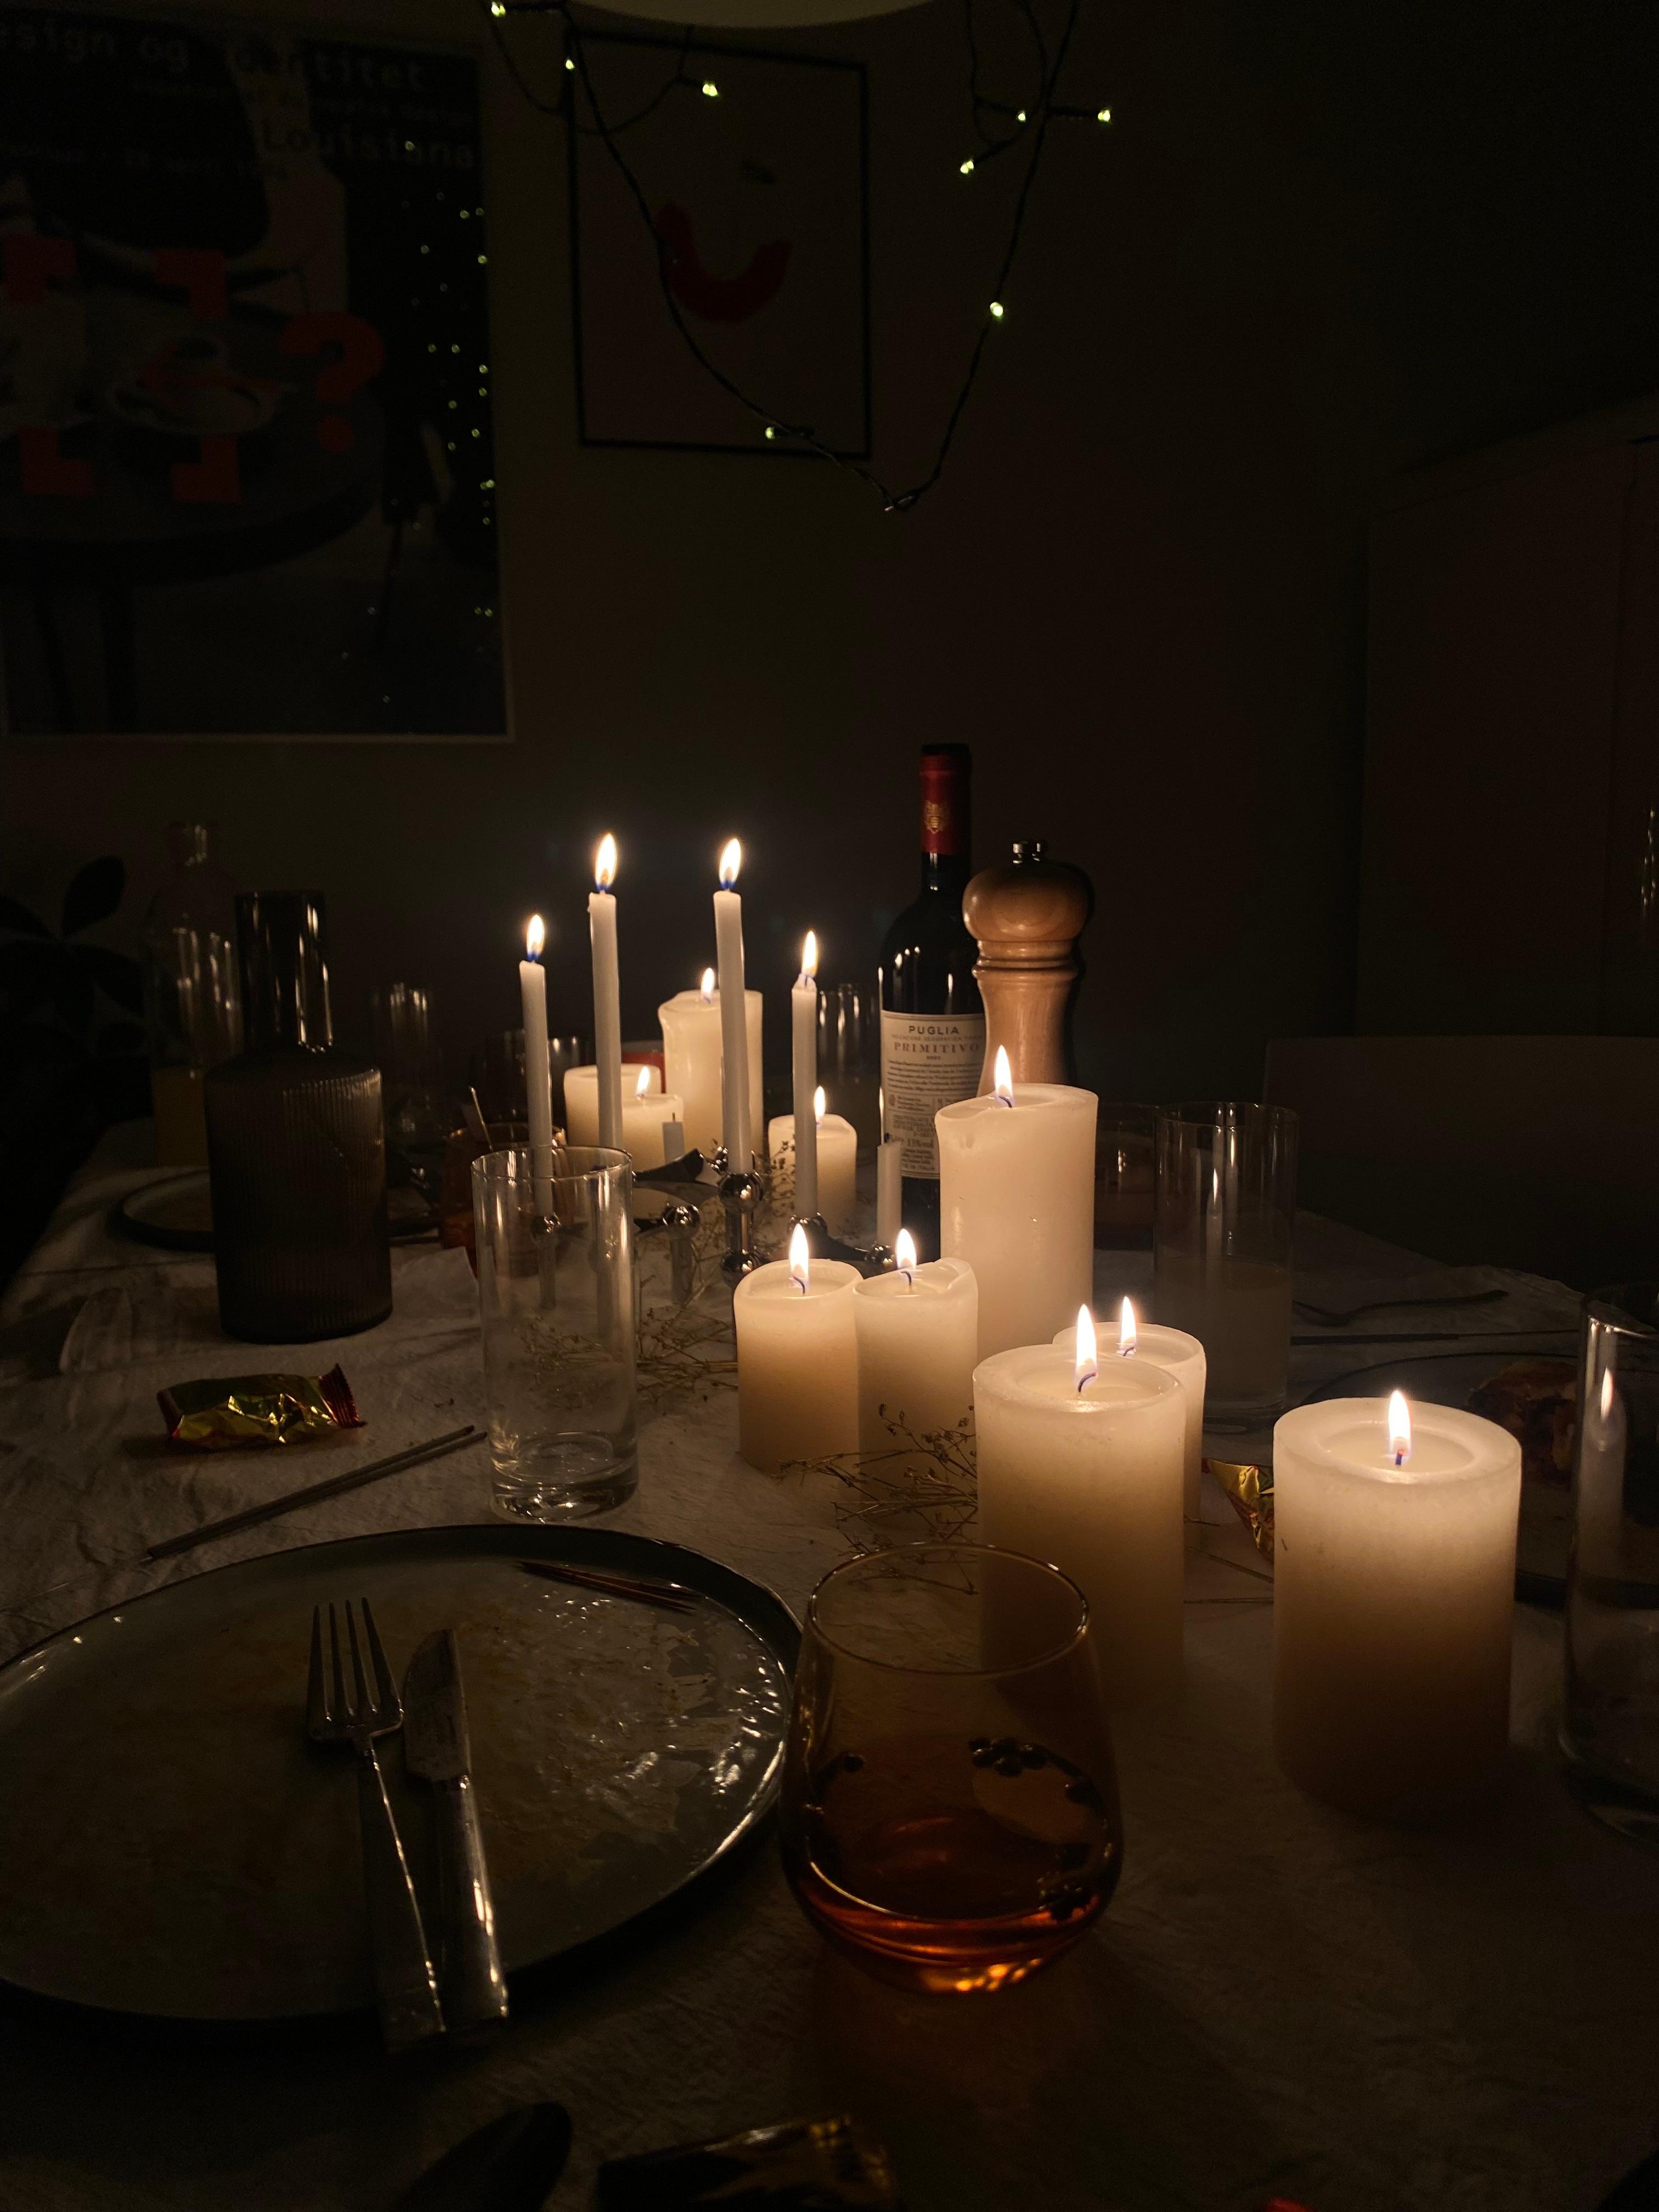 Dinner time ✨
#tablesettings #dinnertable #candles